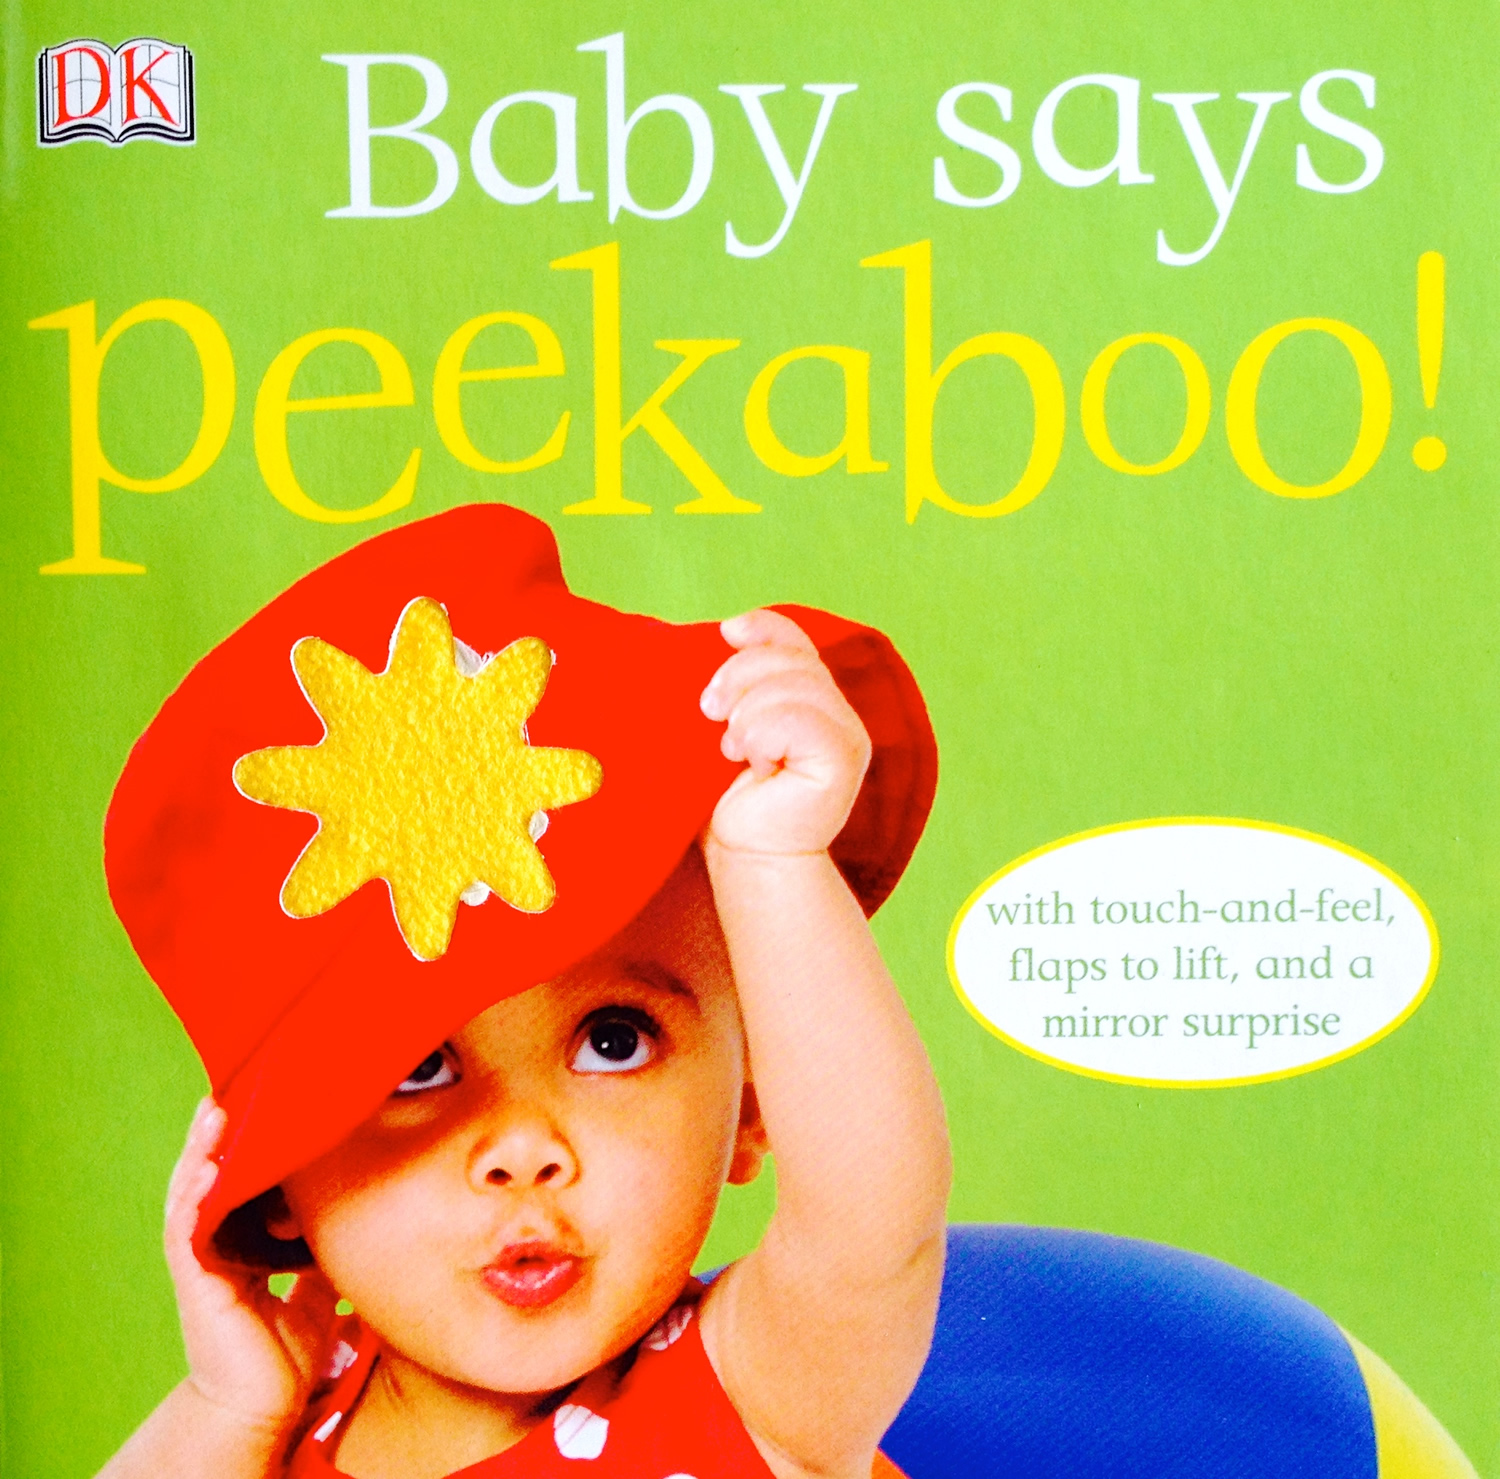 Baby Says Peekaboo! By DK Publishing